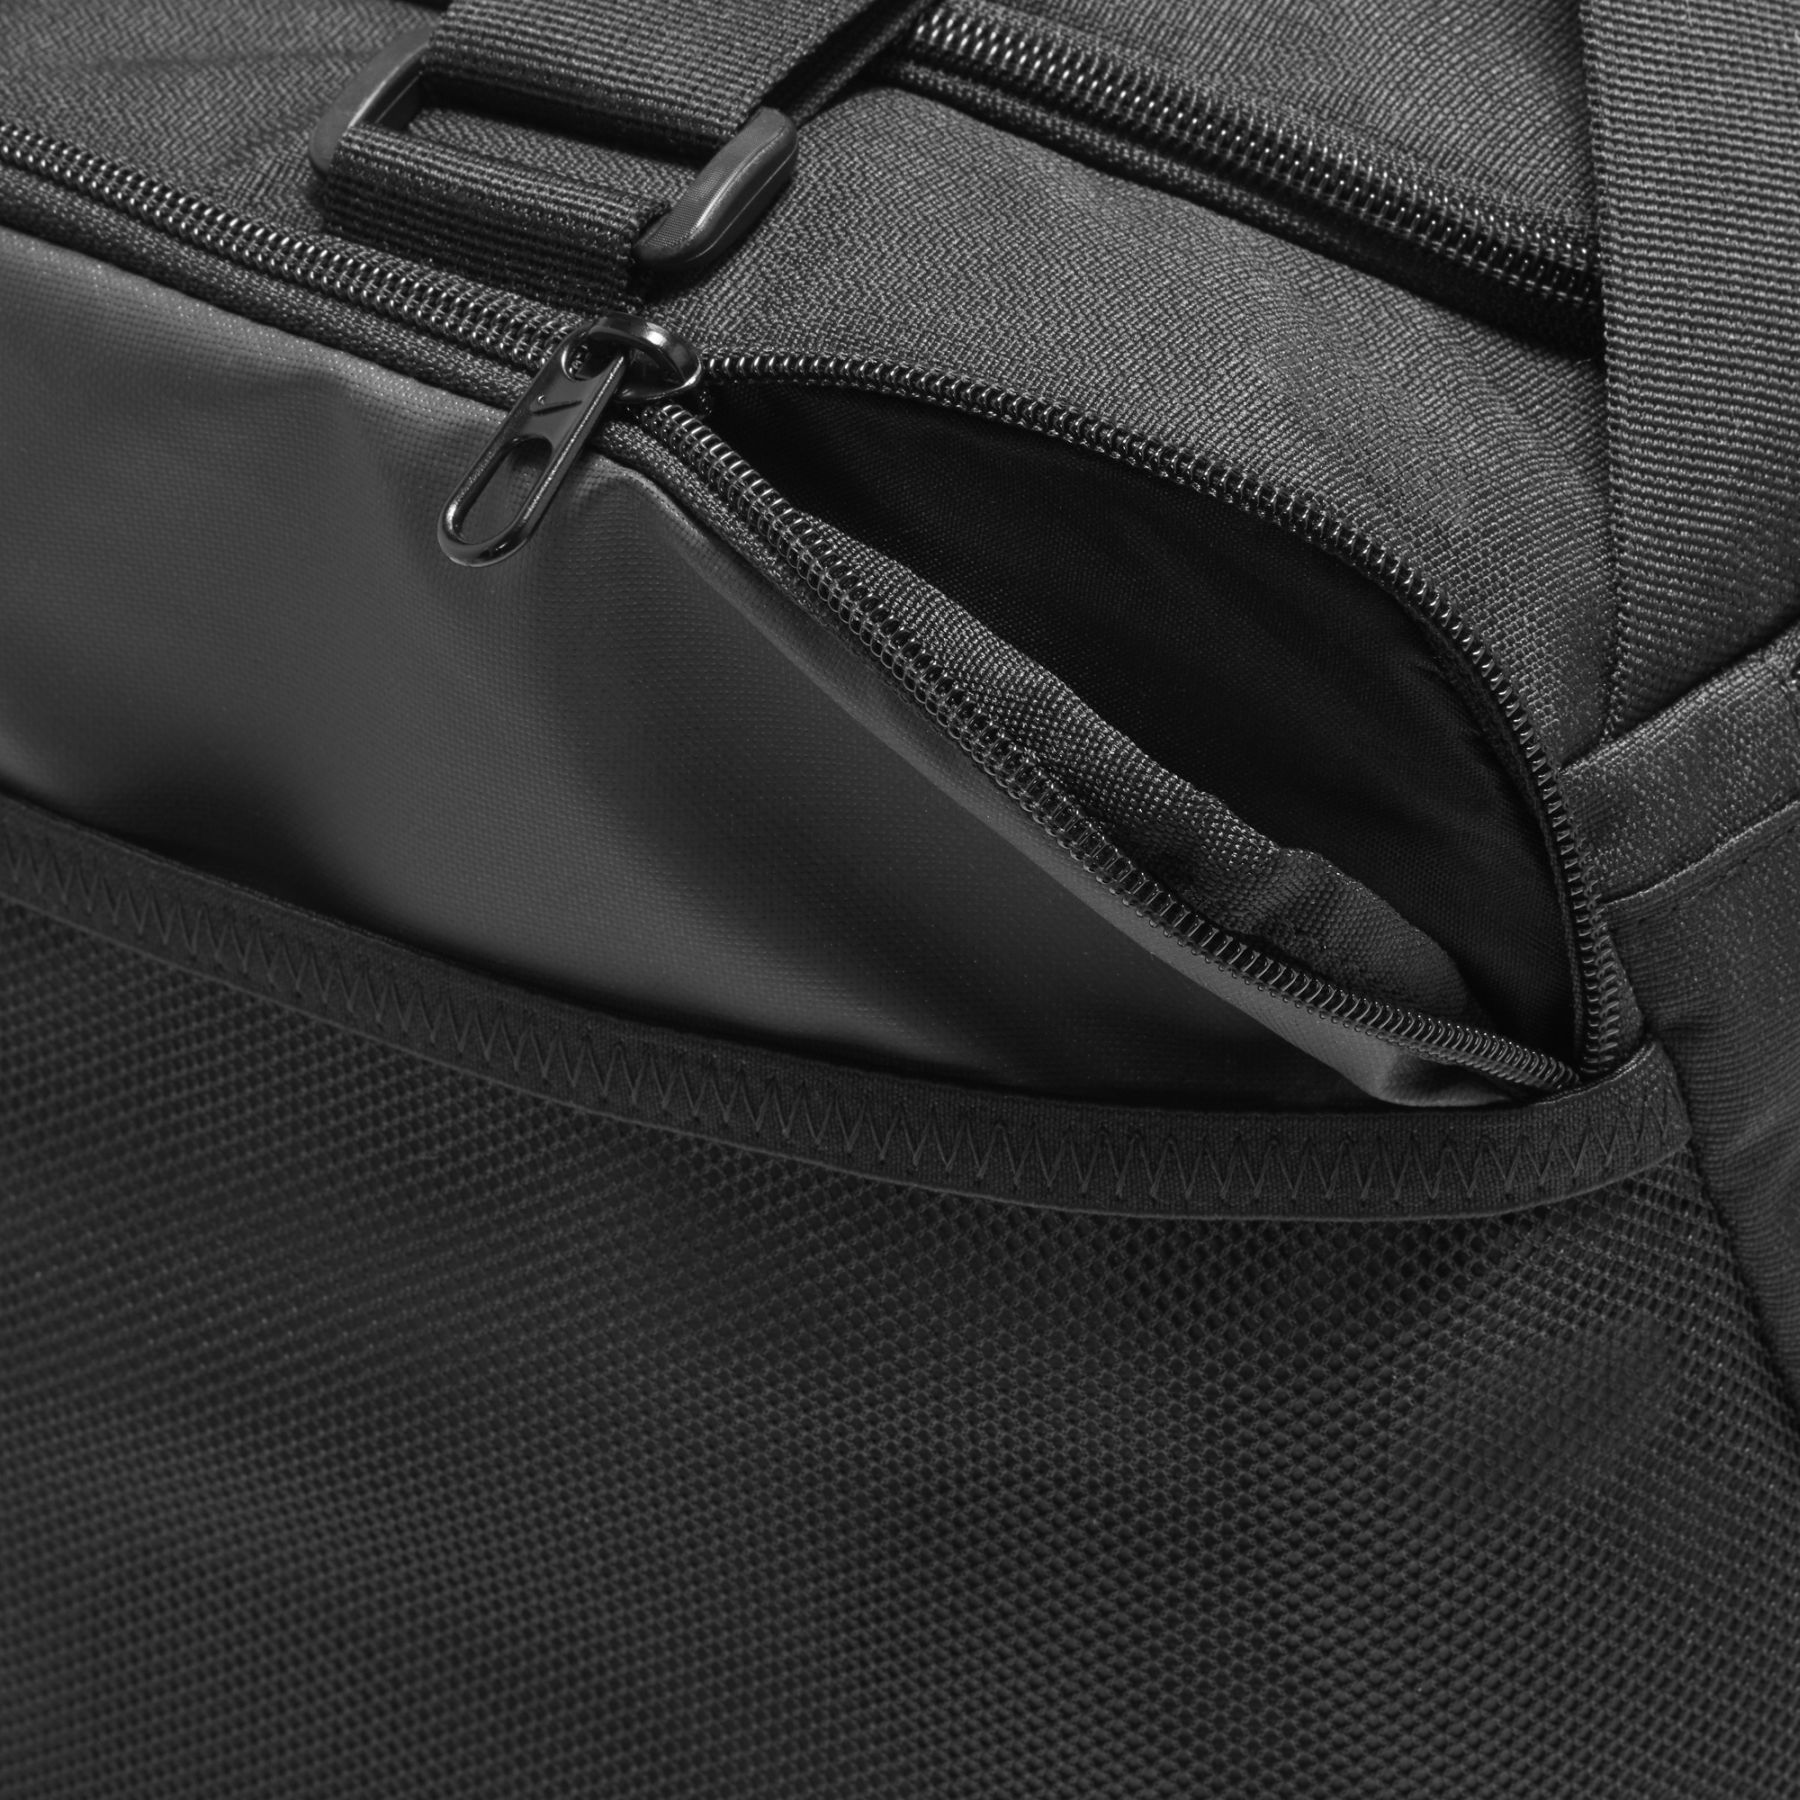 Nike Brasilia 9.5 Training Duffel Bag Outdoor Travel Daypack